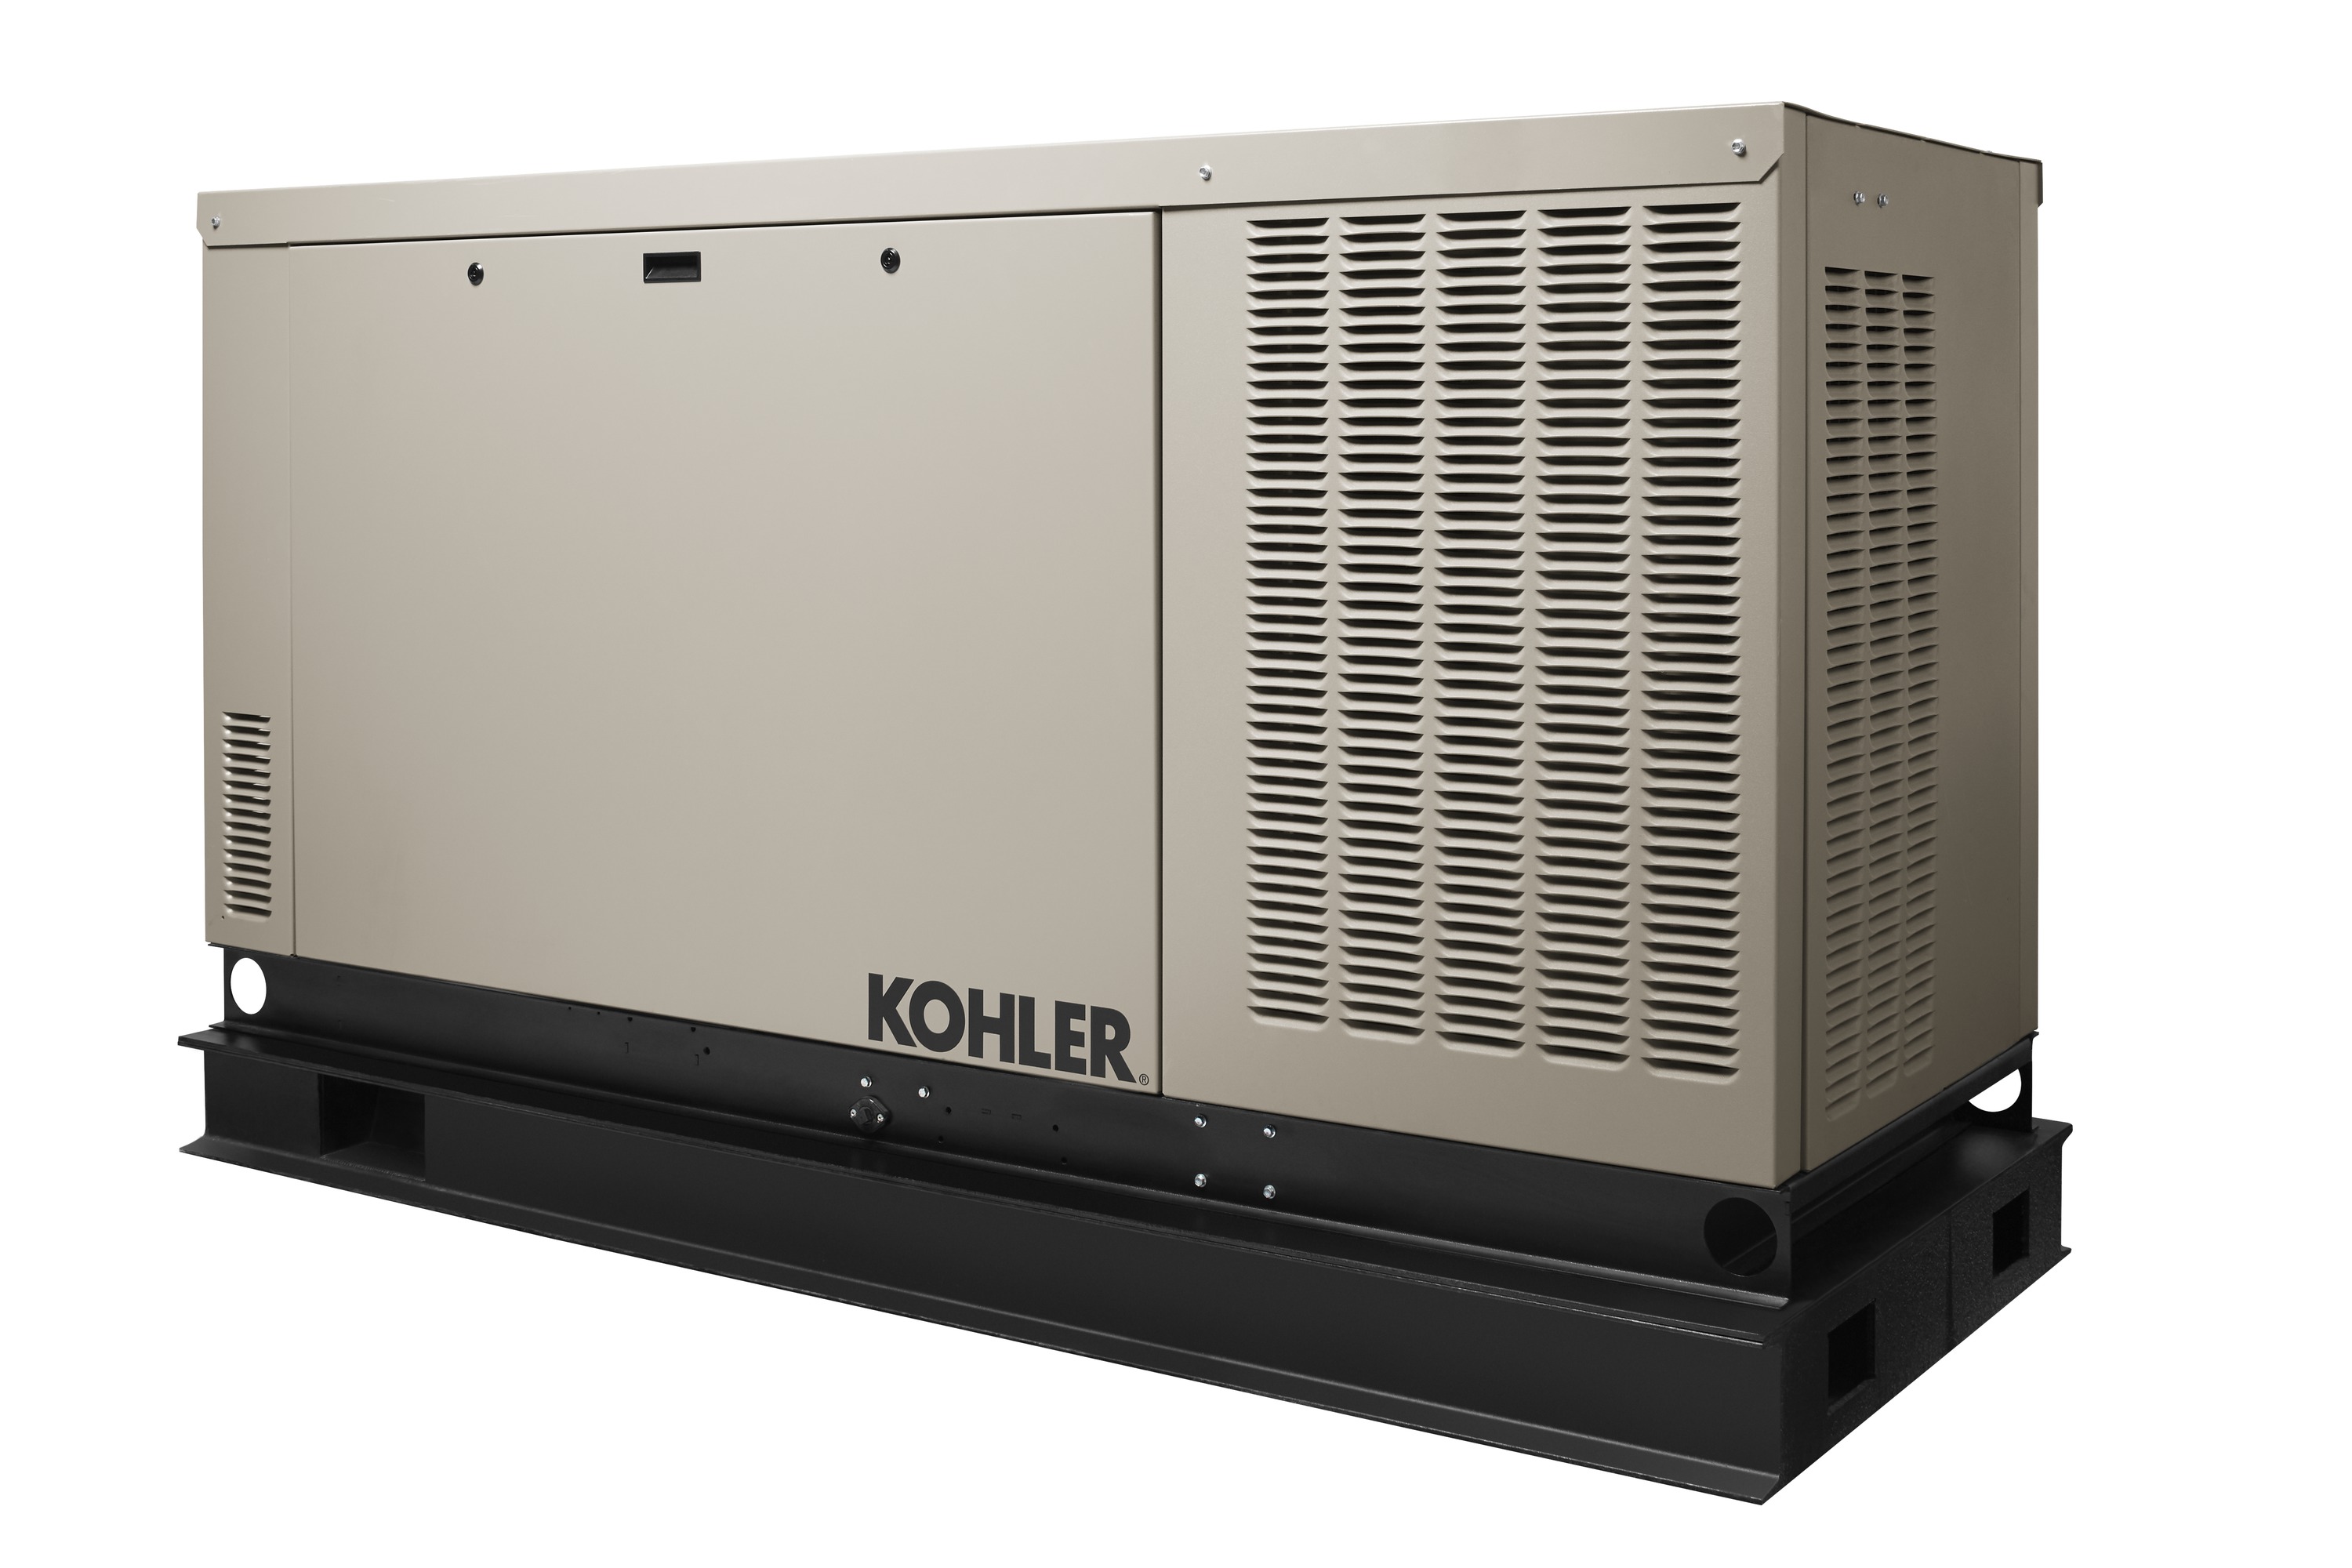 new-kohler-generators-bring-next-level-performance-to-commercial